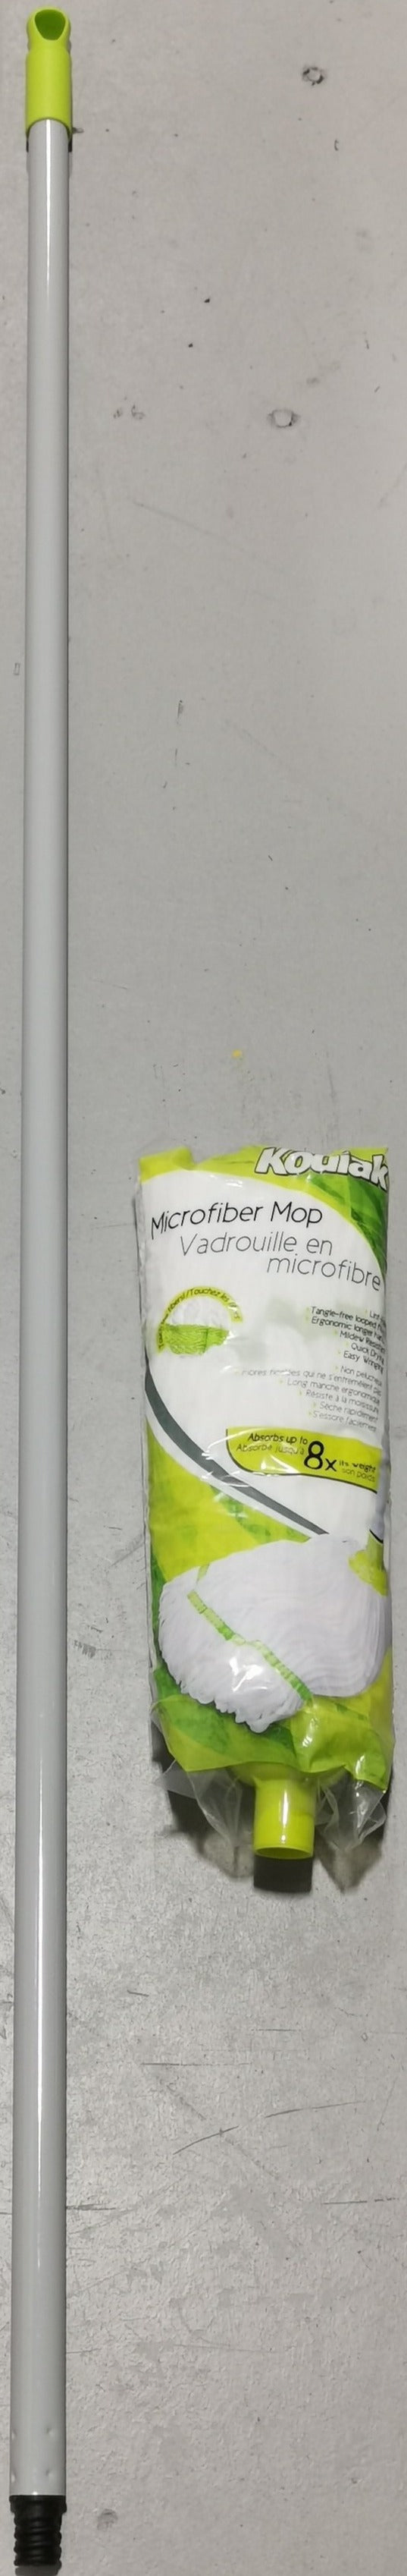 Mop, Kodiak Microfiber Mop w/ metal handle